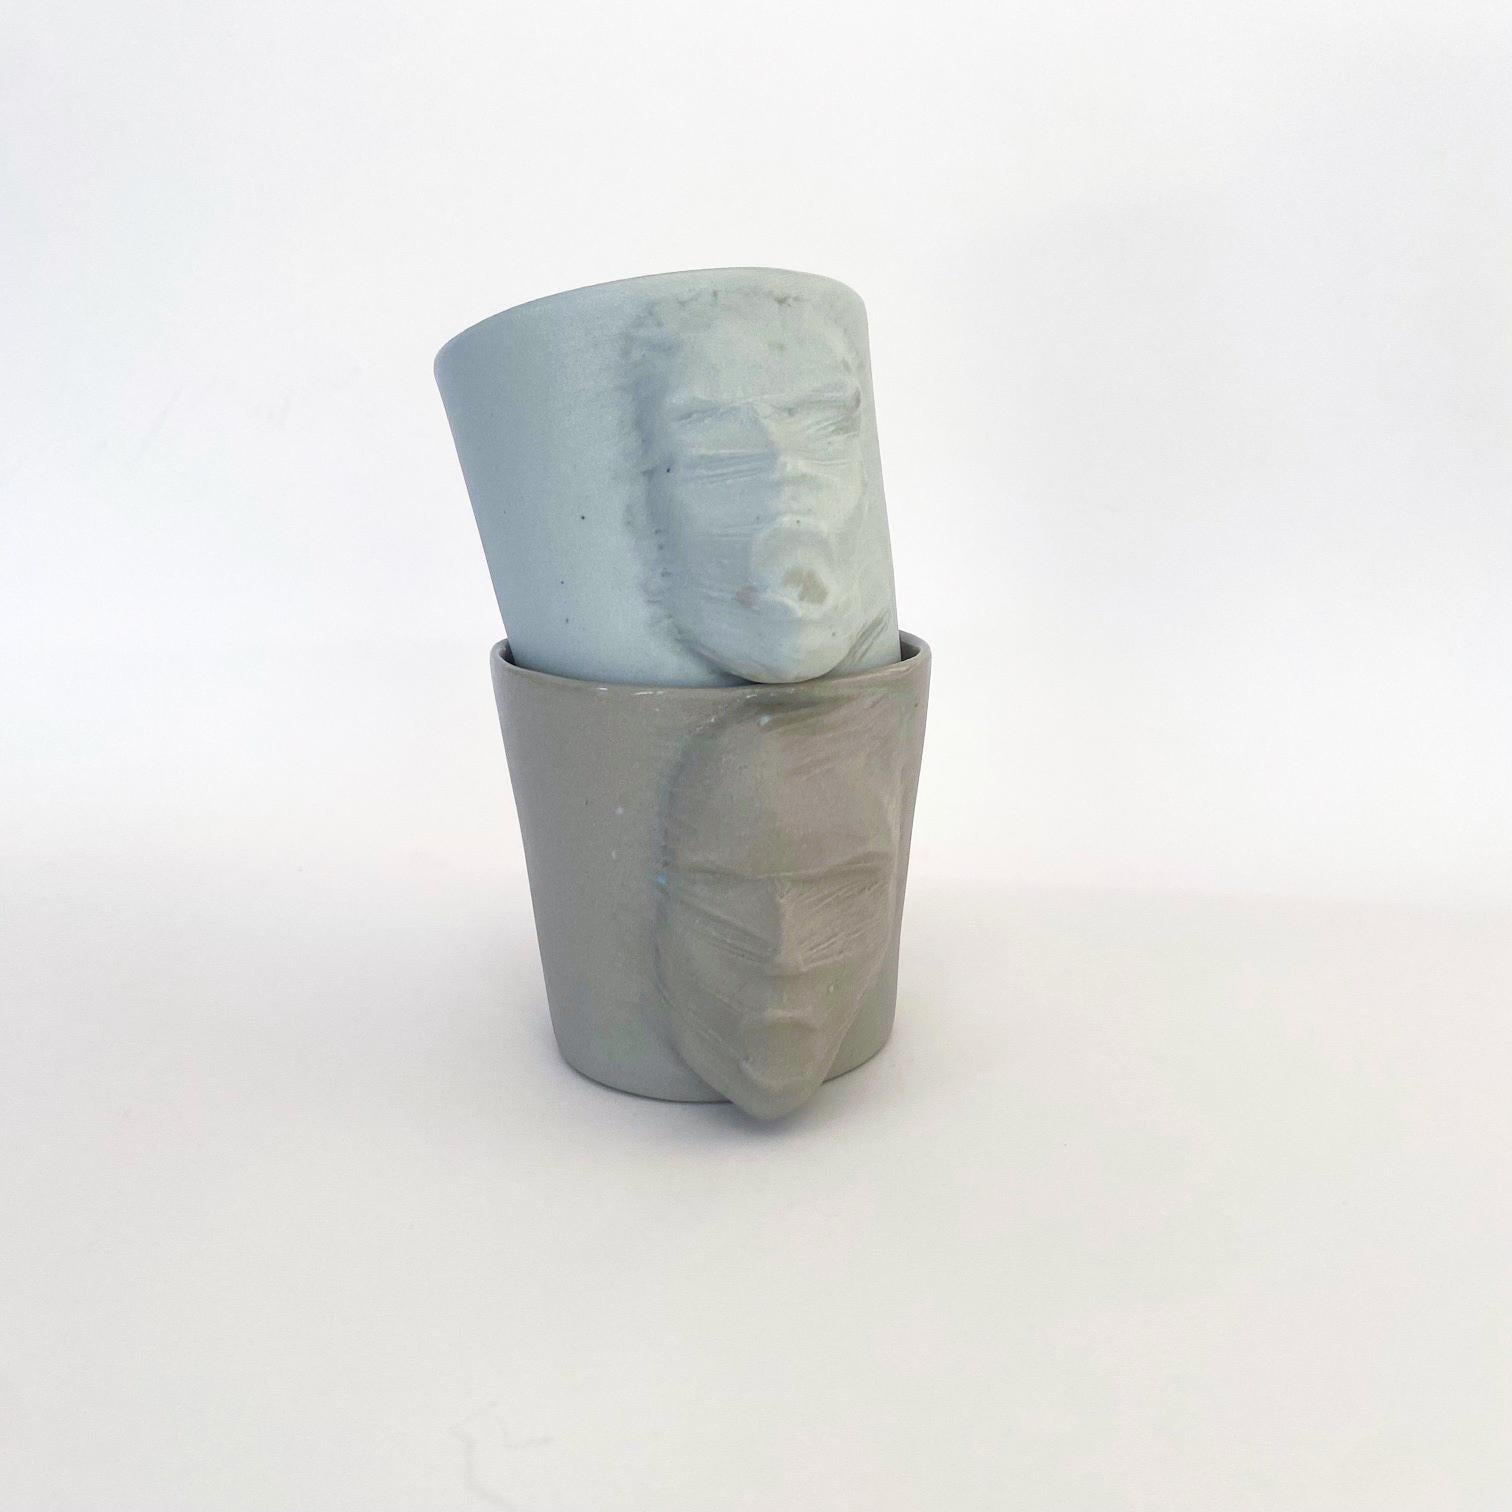 A set of 2 sculptural porcelain cups handmade by the ceramic artist Hulya Sozer. 
Food safe glaze.
Dishwasher safe.

Height: 6cm / Depth: 8cm / Diameter: 6cm
Volume: 100ml
Set includes 2 porcelain cups of 100ml

* Colors may slightly vary due to